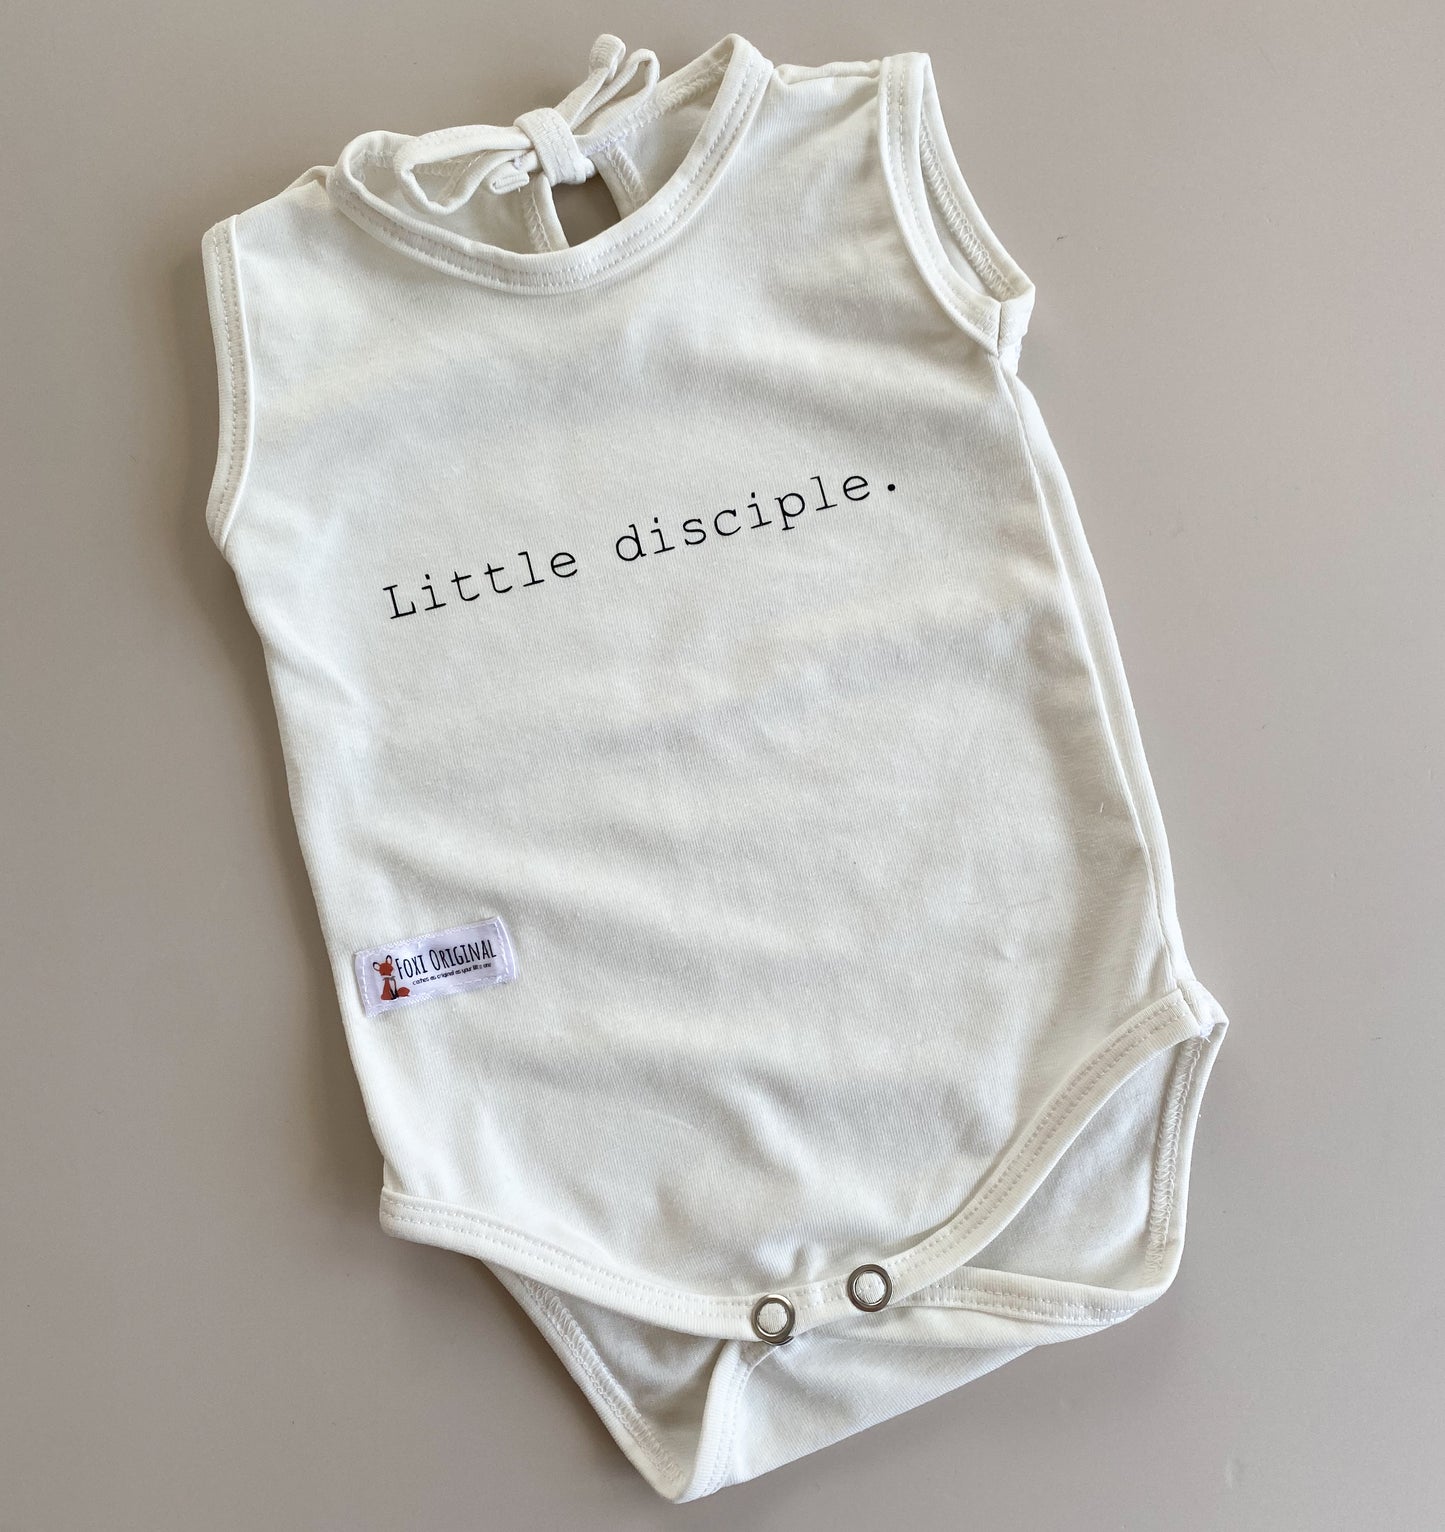 Little disciple bodysuit